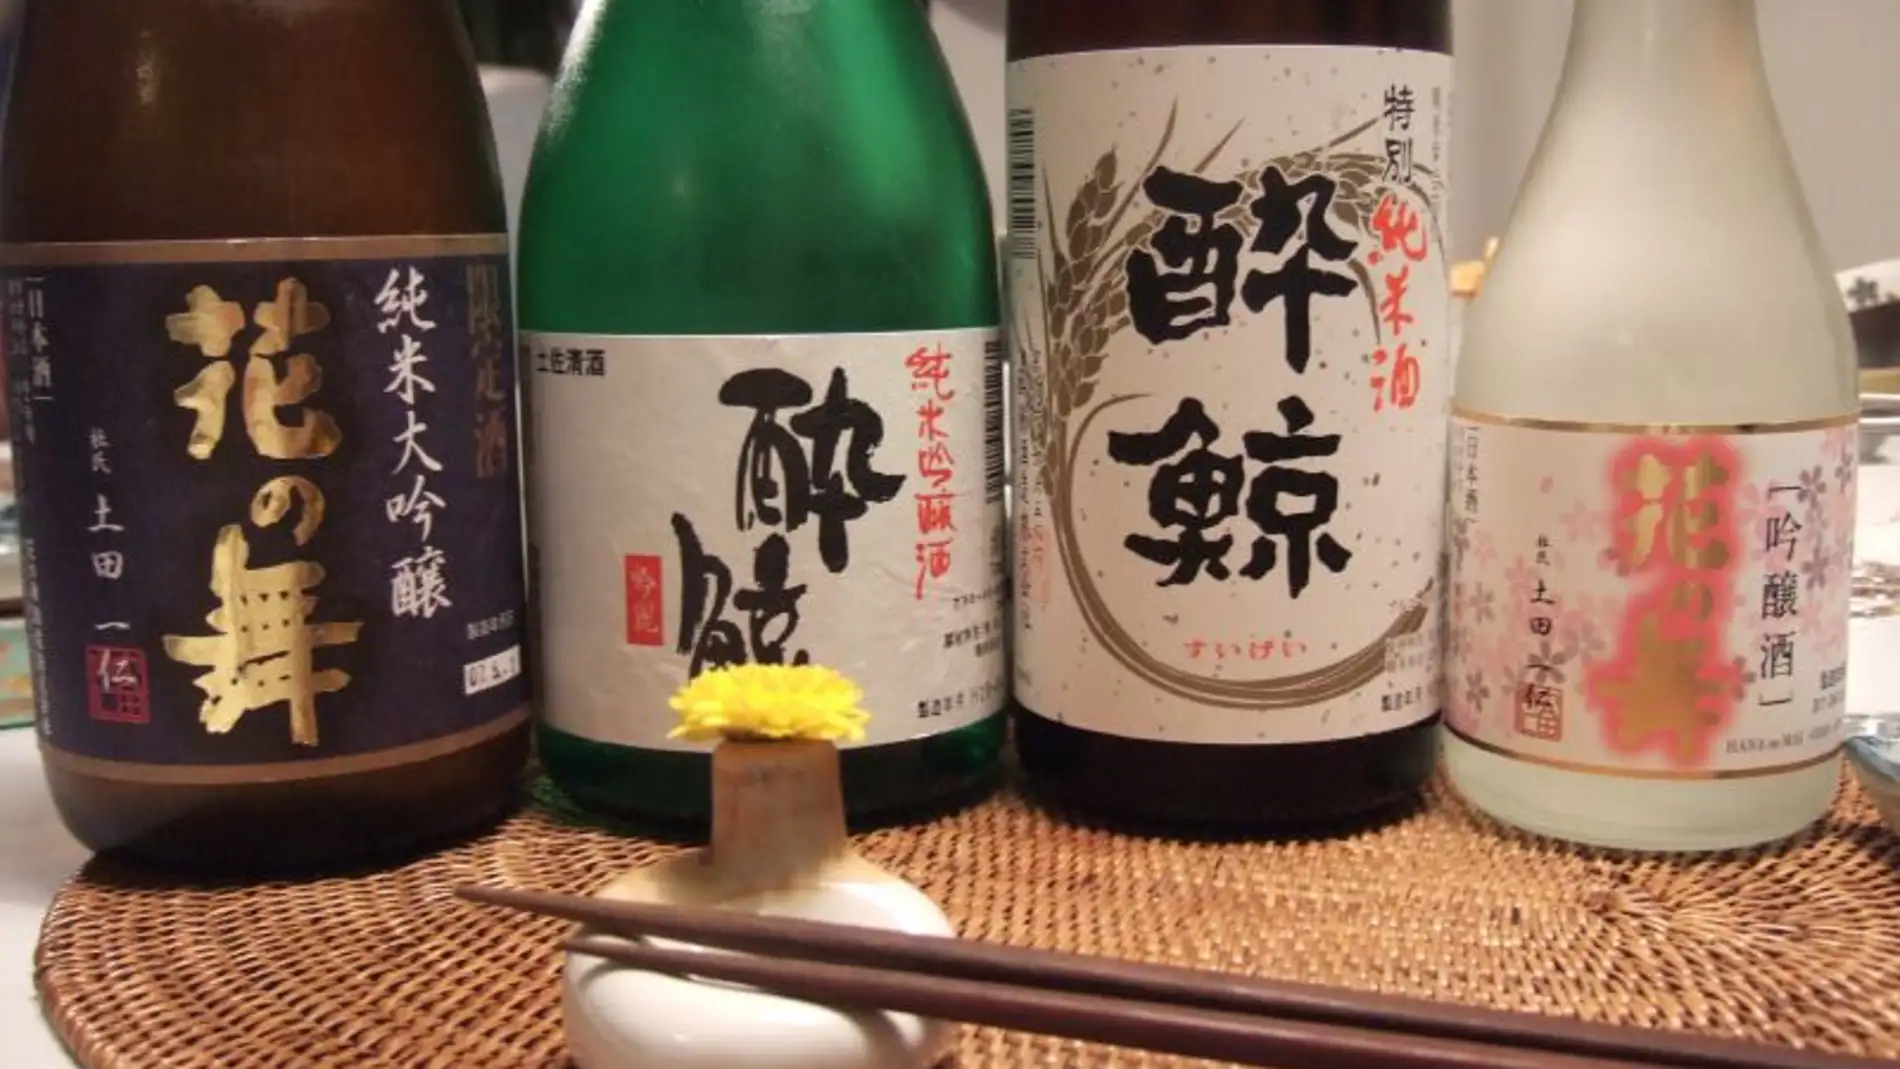 ¡Al rico sake!